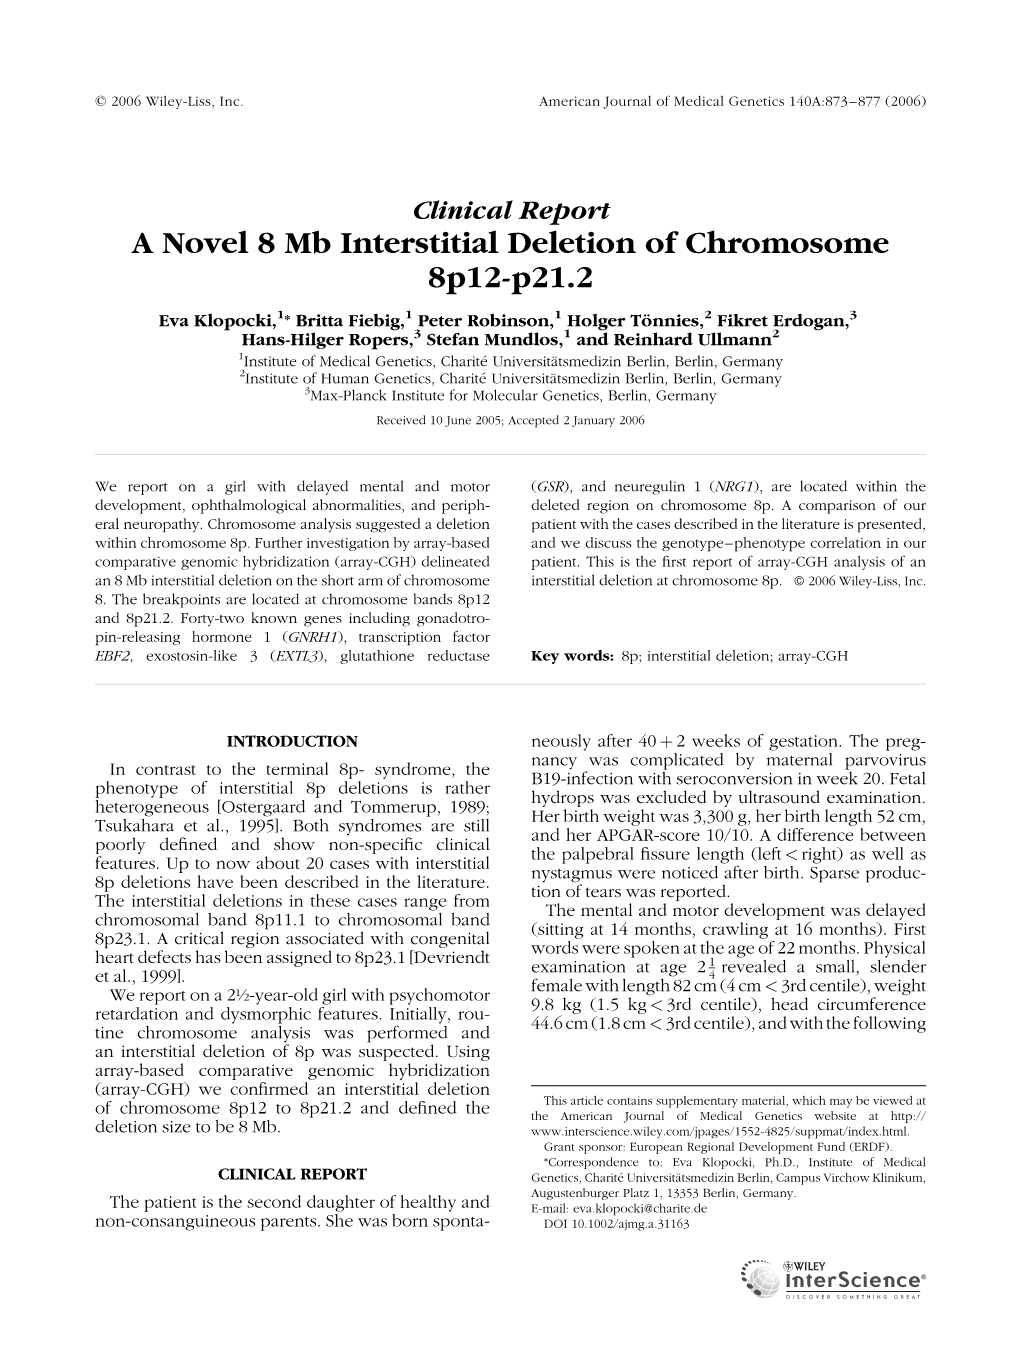 A Novel 8 Mb Interstitial Deletion of Chromosome 8P12-P21.2